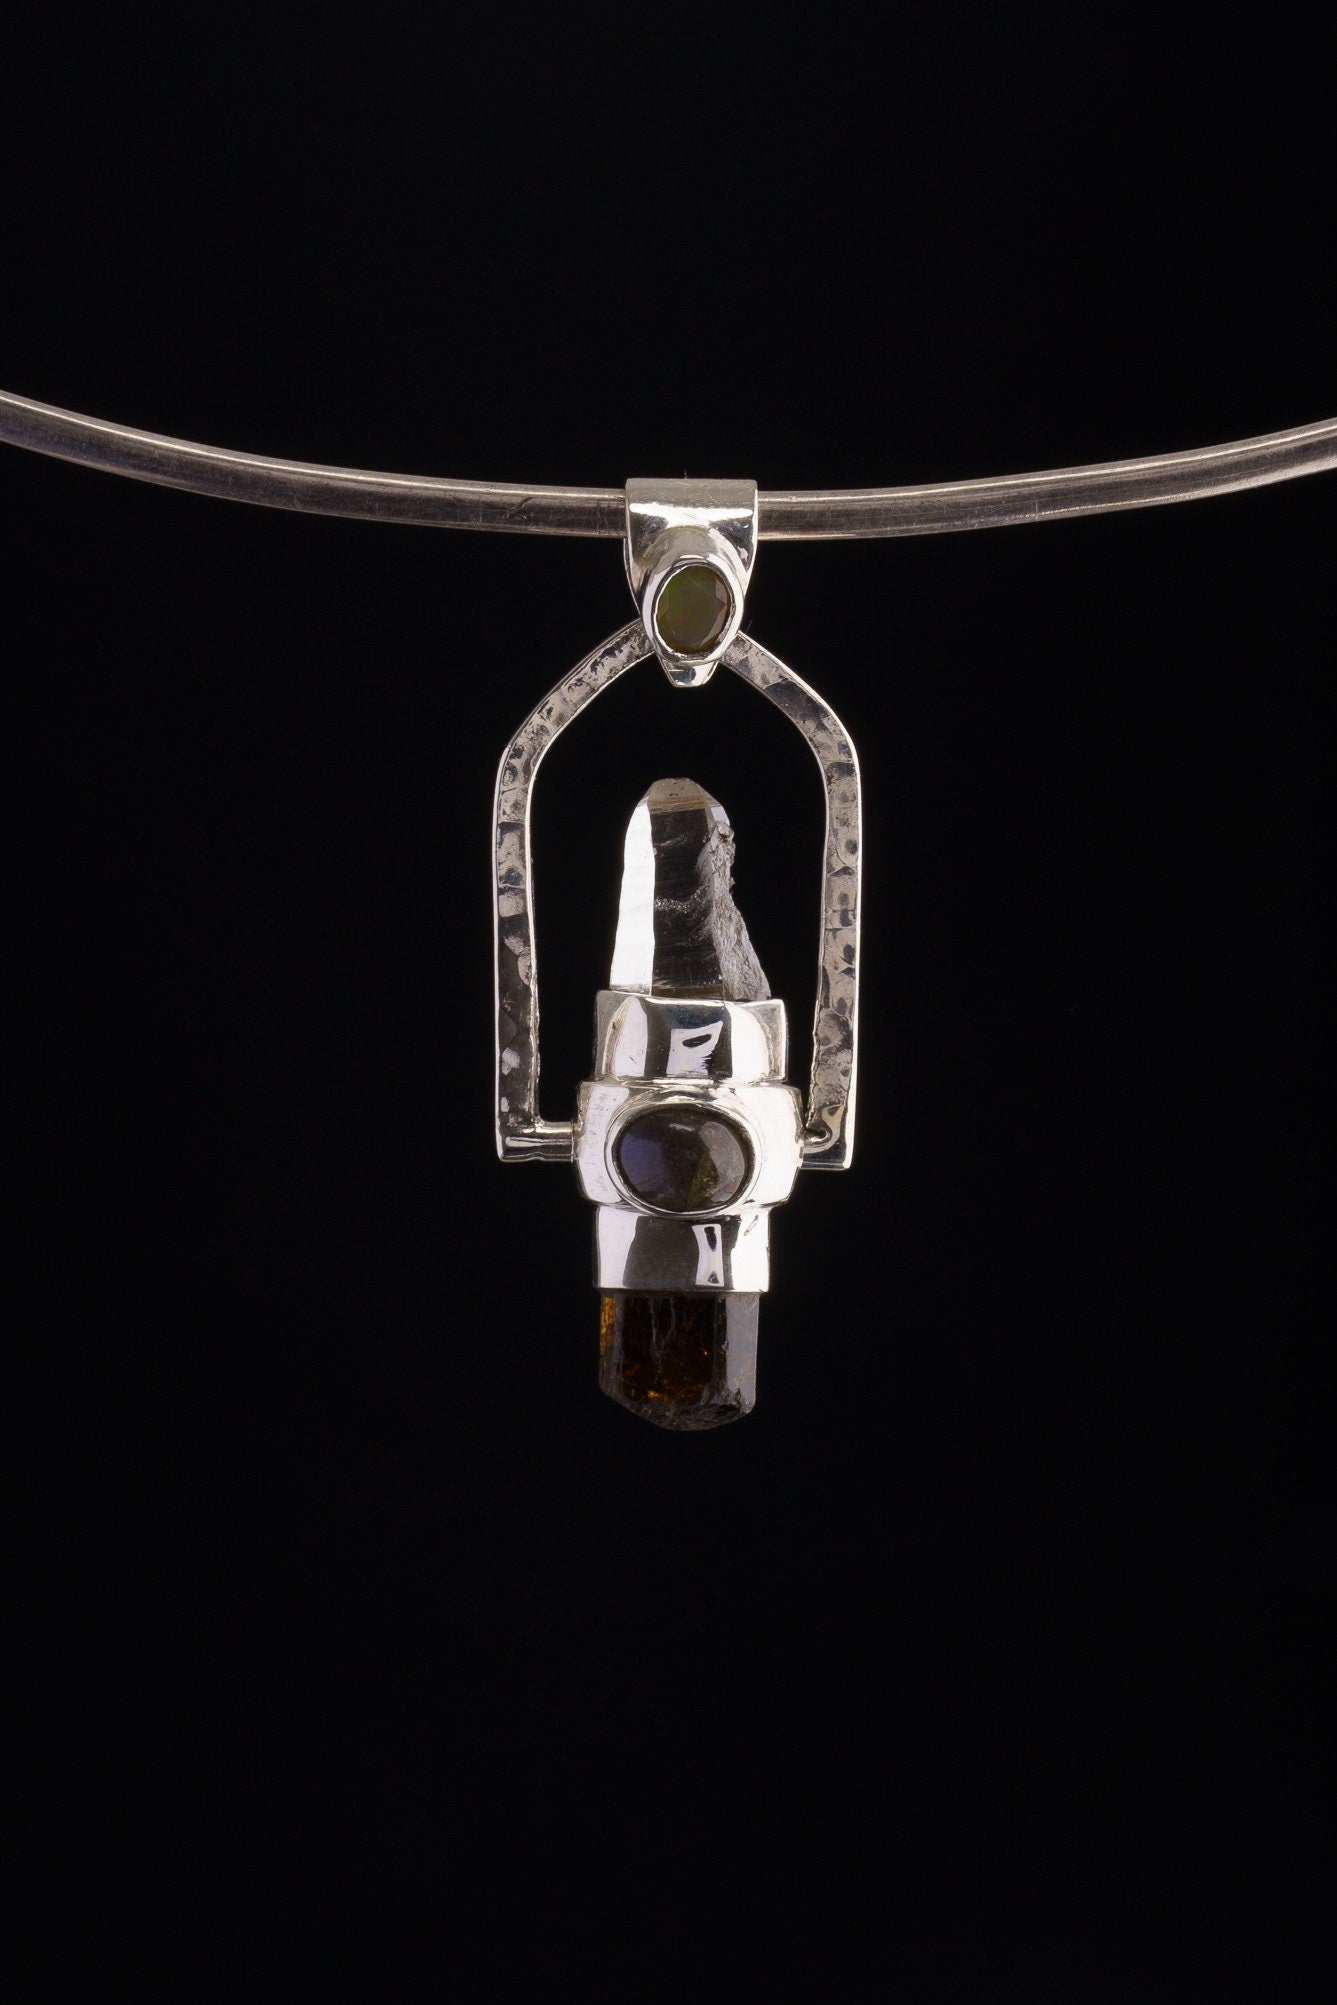 Himalayan Lazer & Gem Dravite Tourmaline with a Ethiopian opal, Labradorite, Aquamarine - Sterling Silver Set - Spinning Crystal Pendant